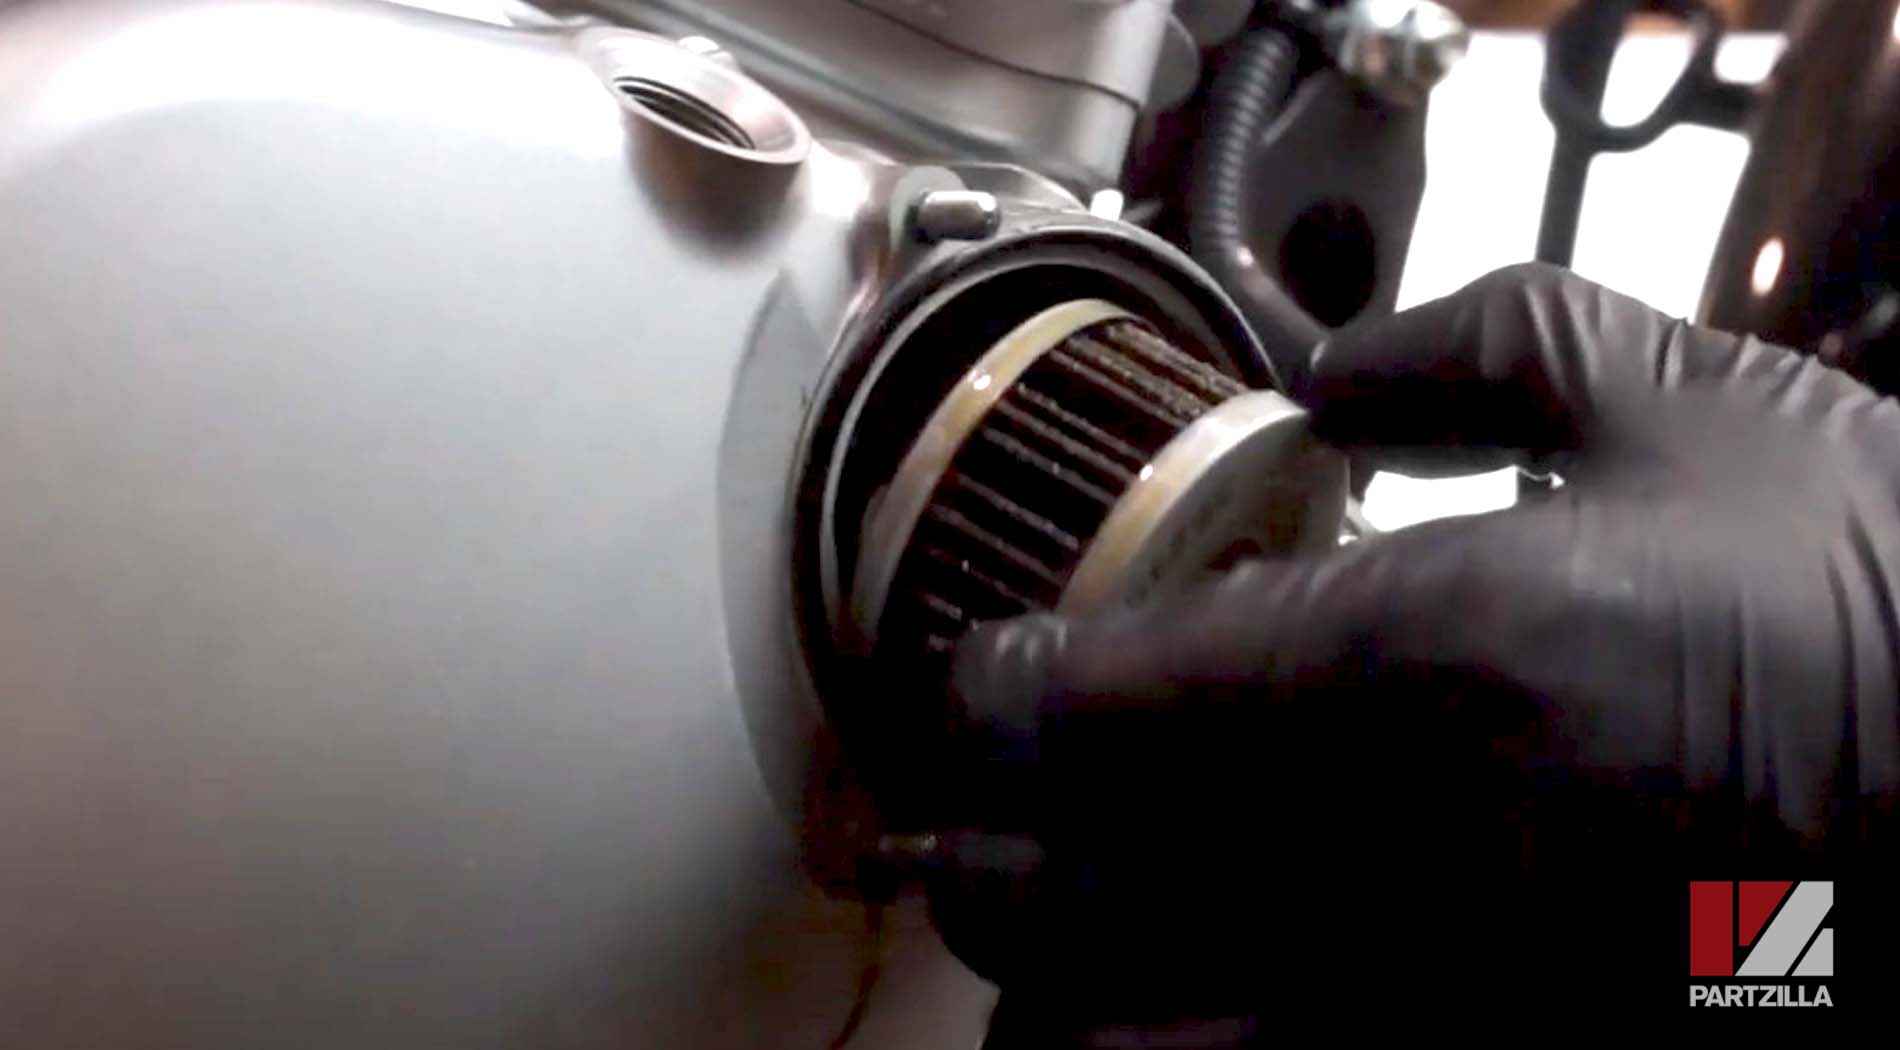 Suzuki motorcycle oil filter removal